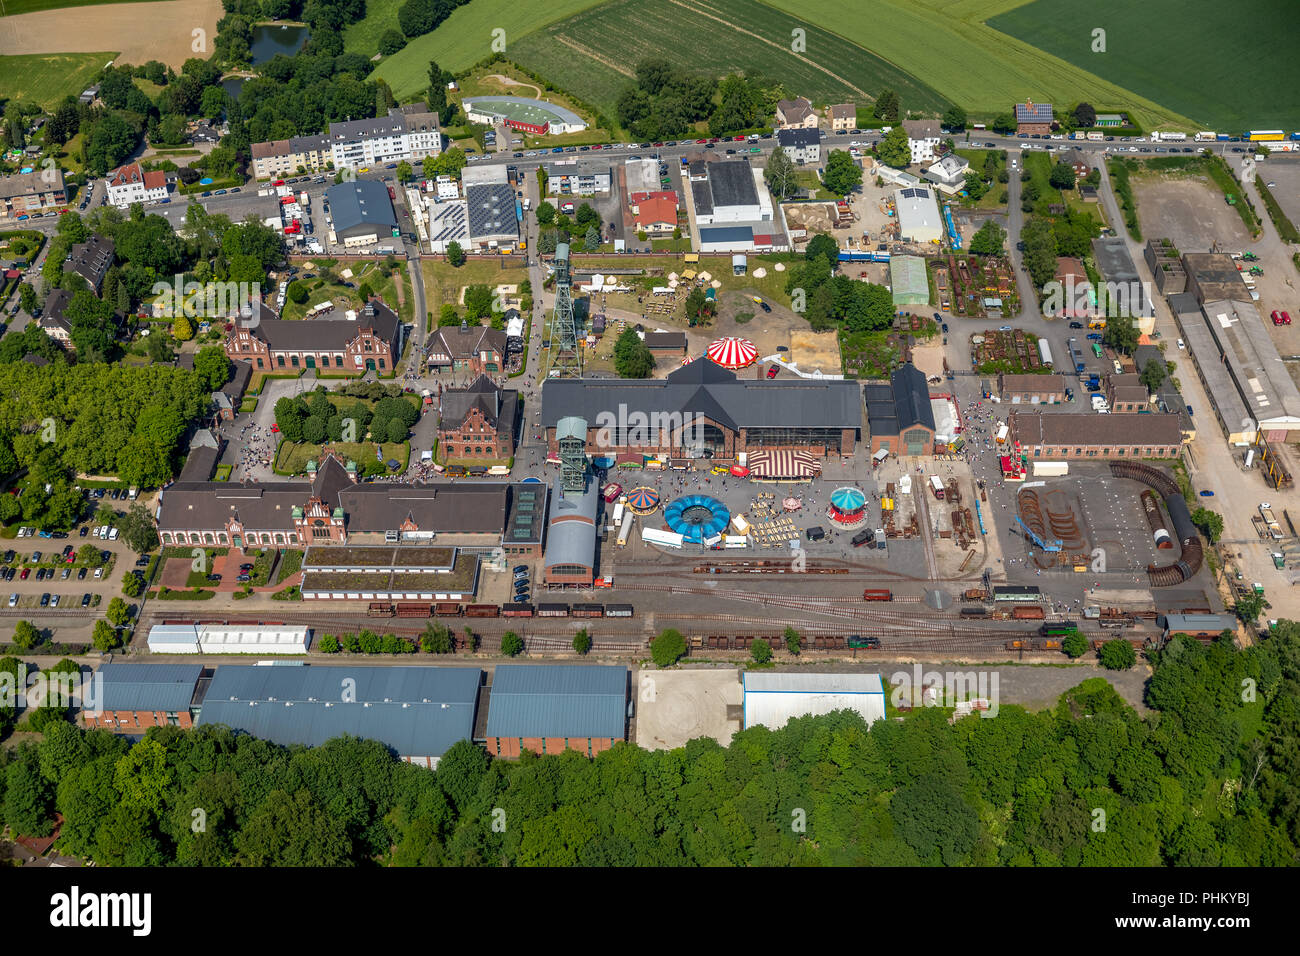 Aerial view, Historischer Jahrmarkt Zeche Zollern ,Festival on the grounds of Zeche Zollern, LWL-Industriemuseum - Westfälisches Landesmuseum für Indu Stock Photo